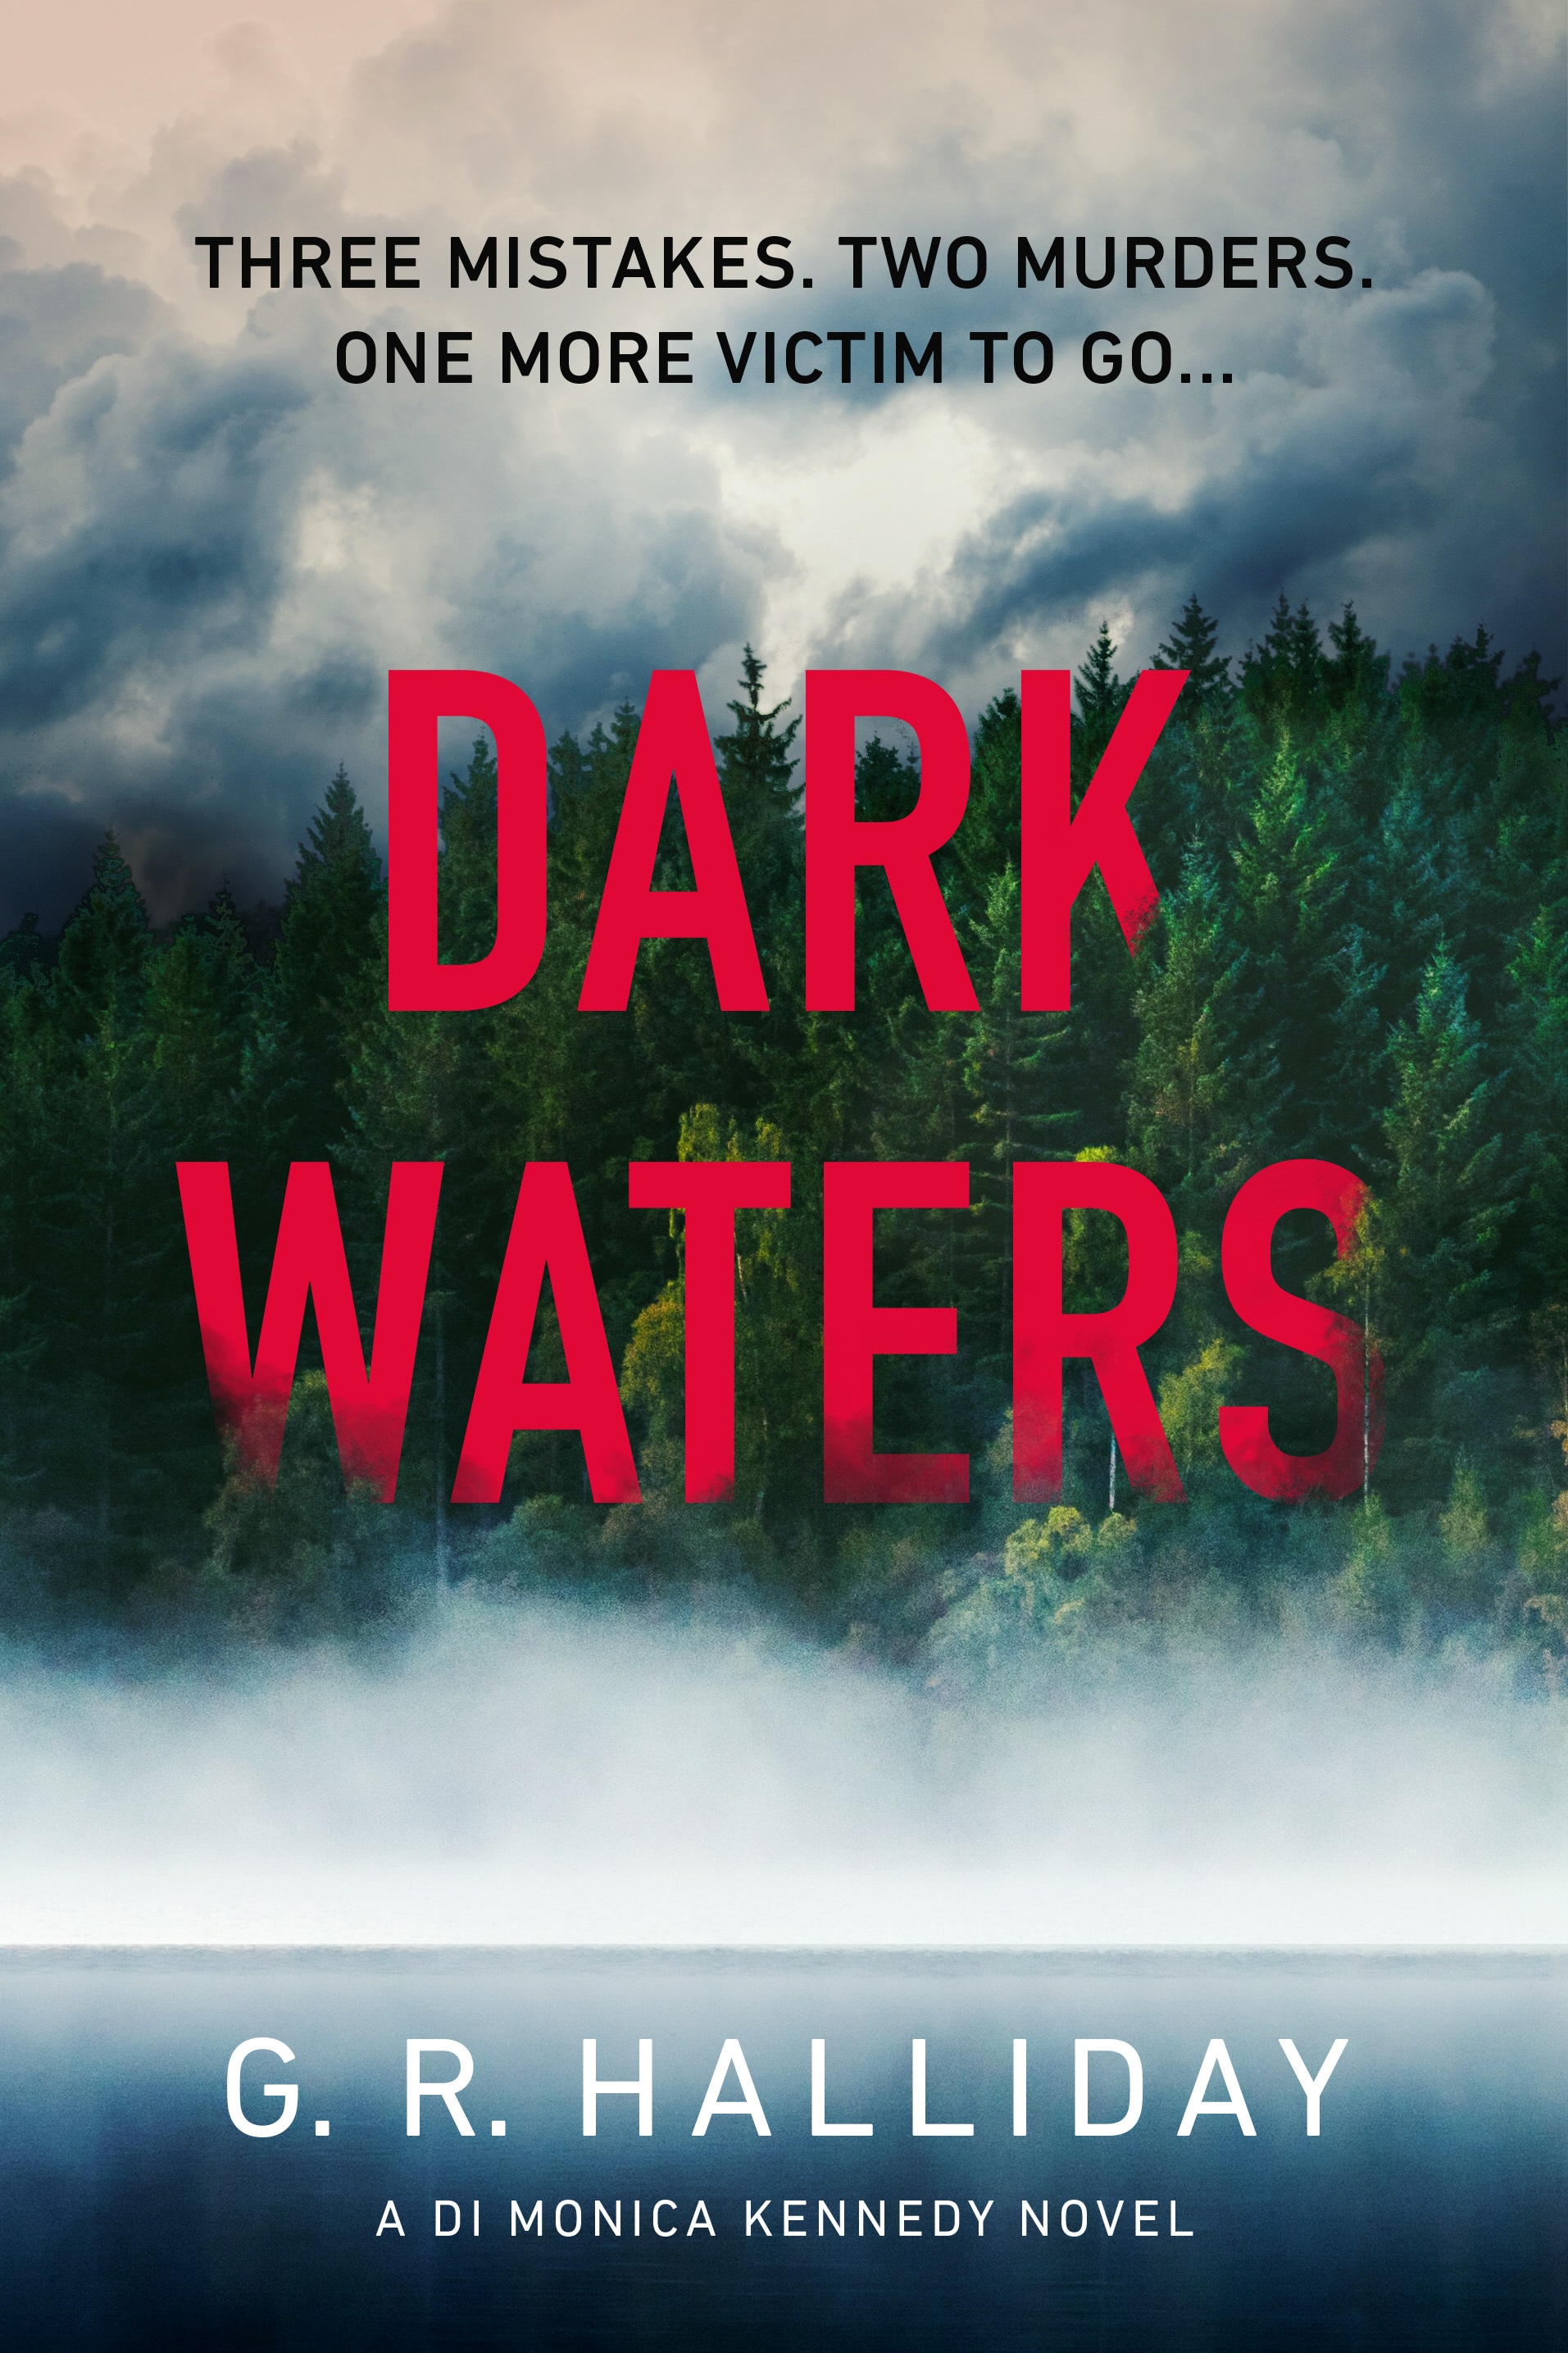 Book “Dark Waters” by G. R. Halliday — July 16, 2020